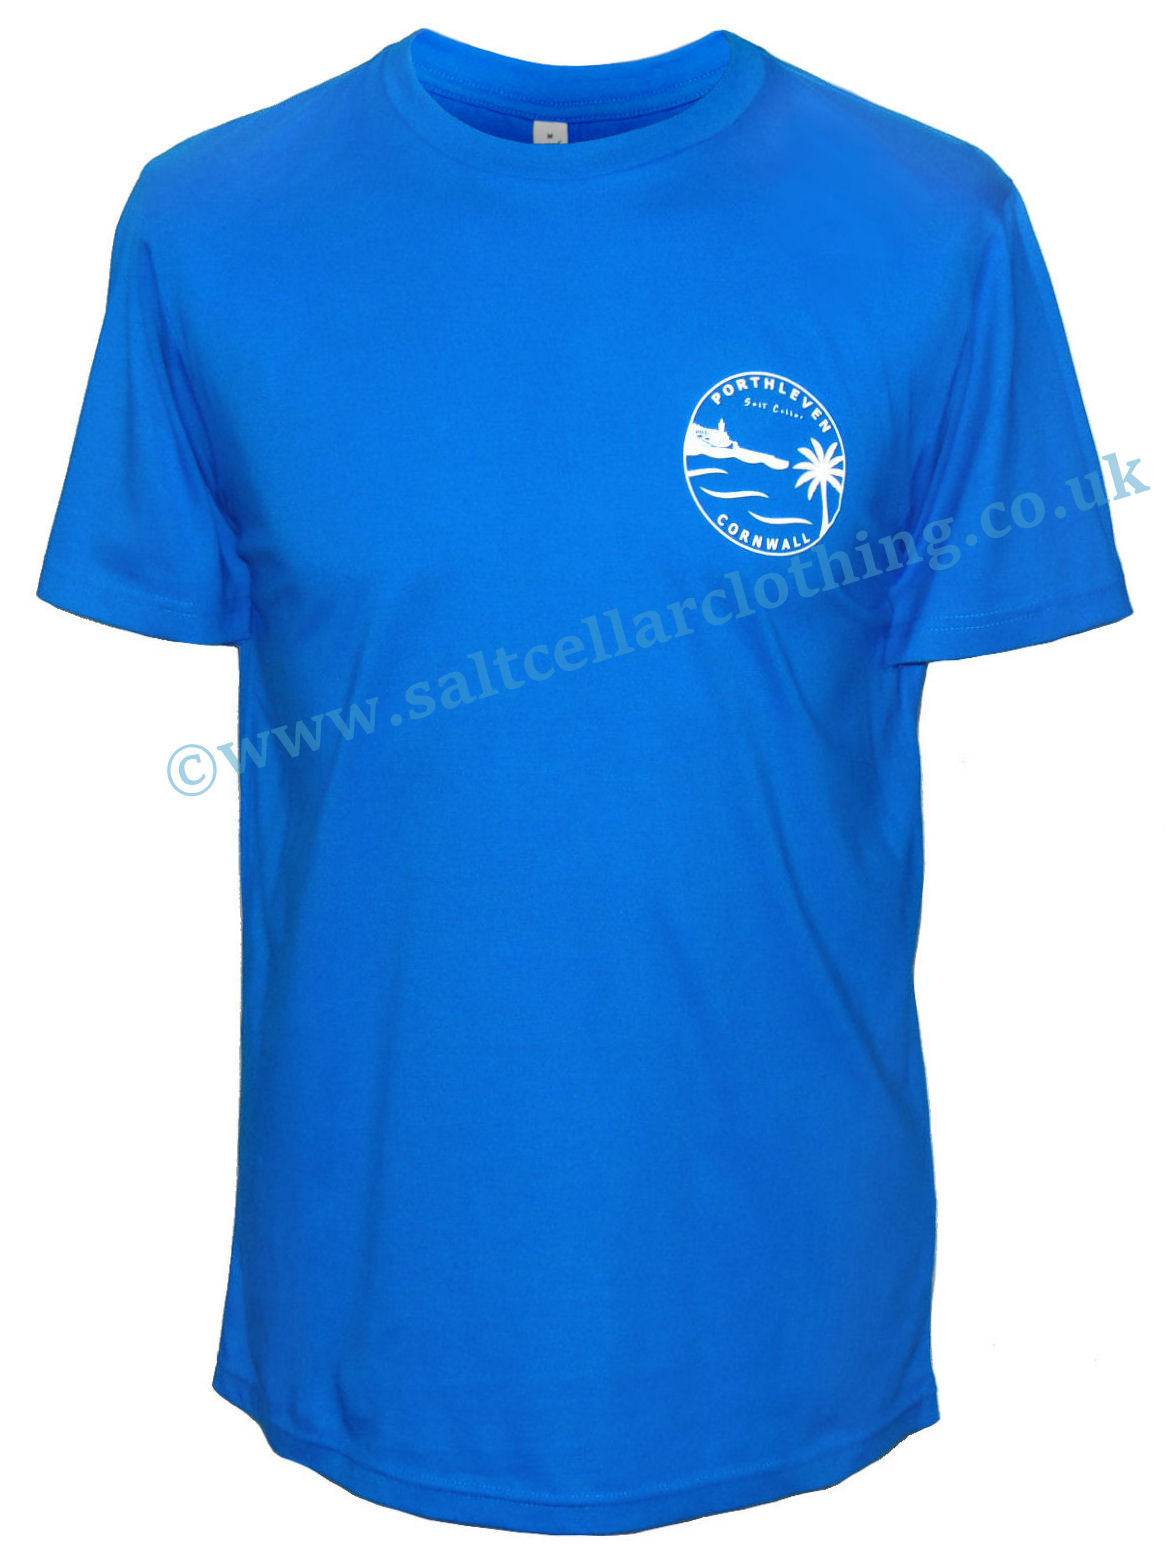 Men's blue Porthleven Cornwall print t-shirt